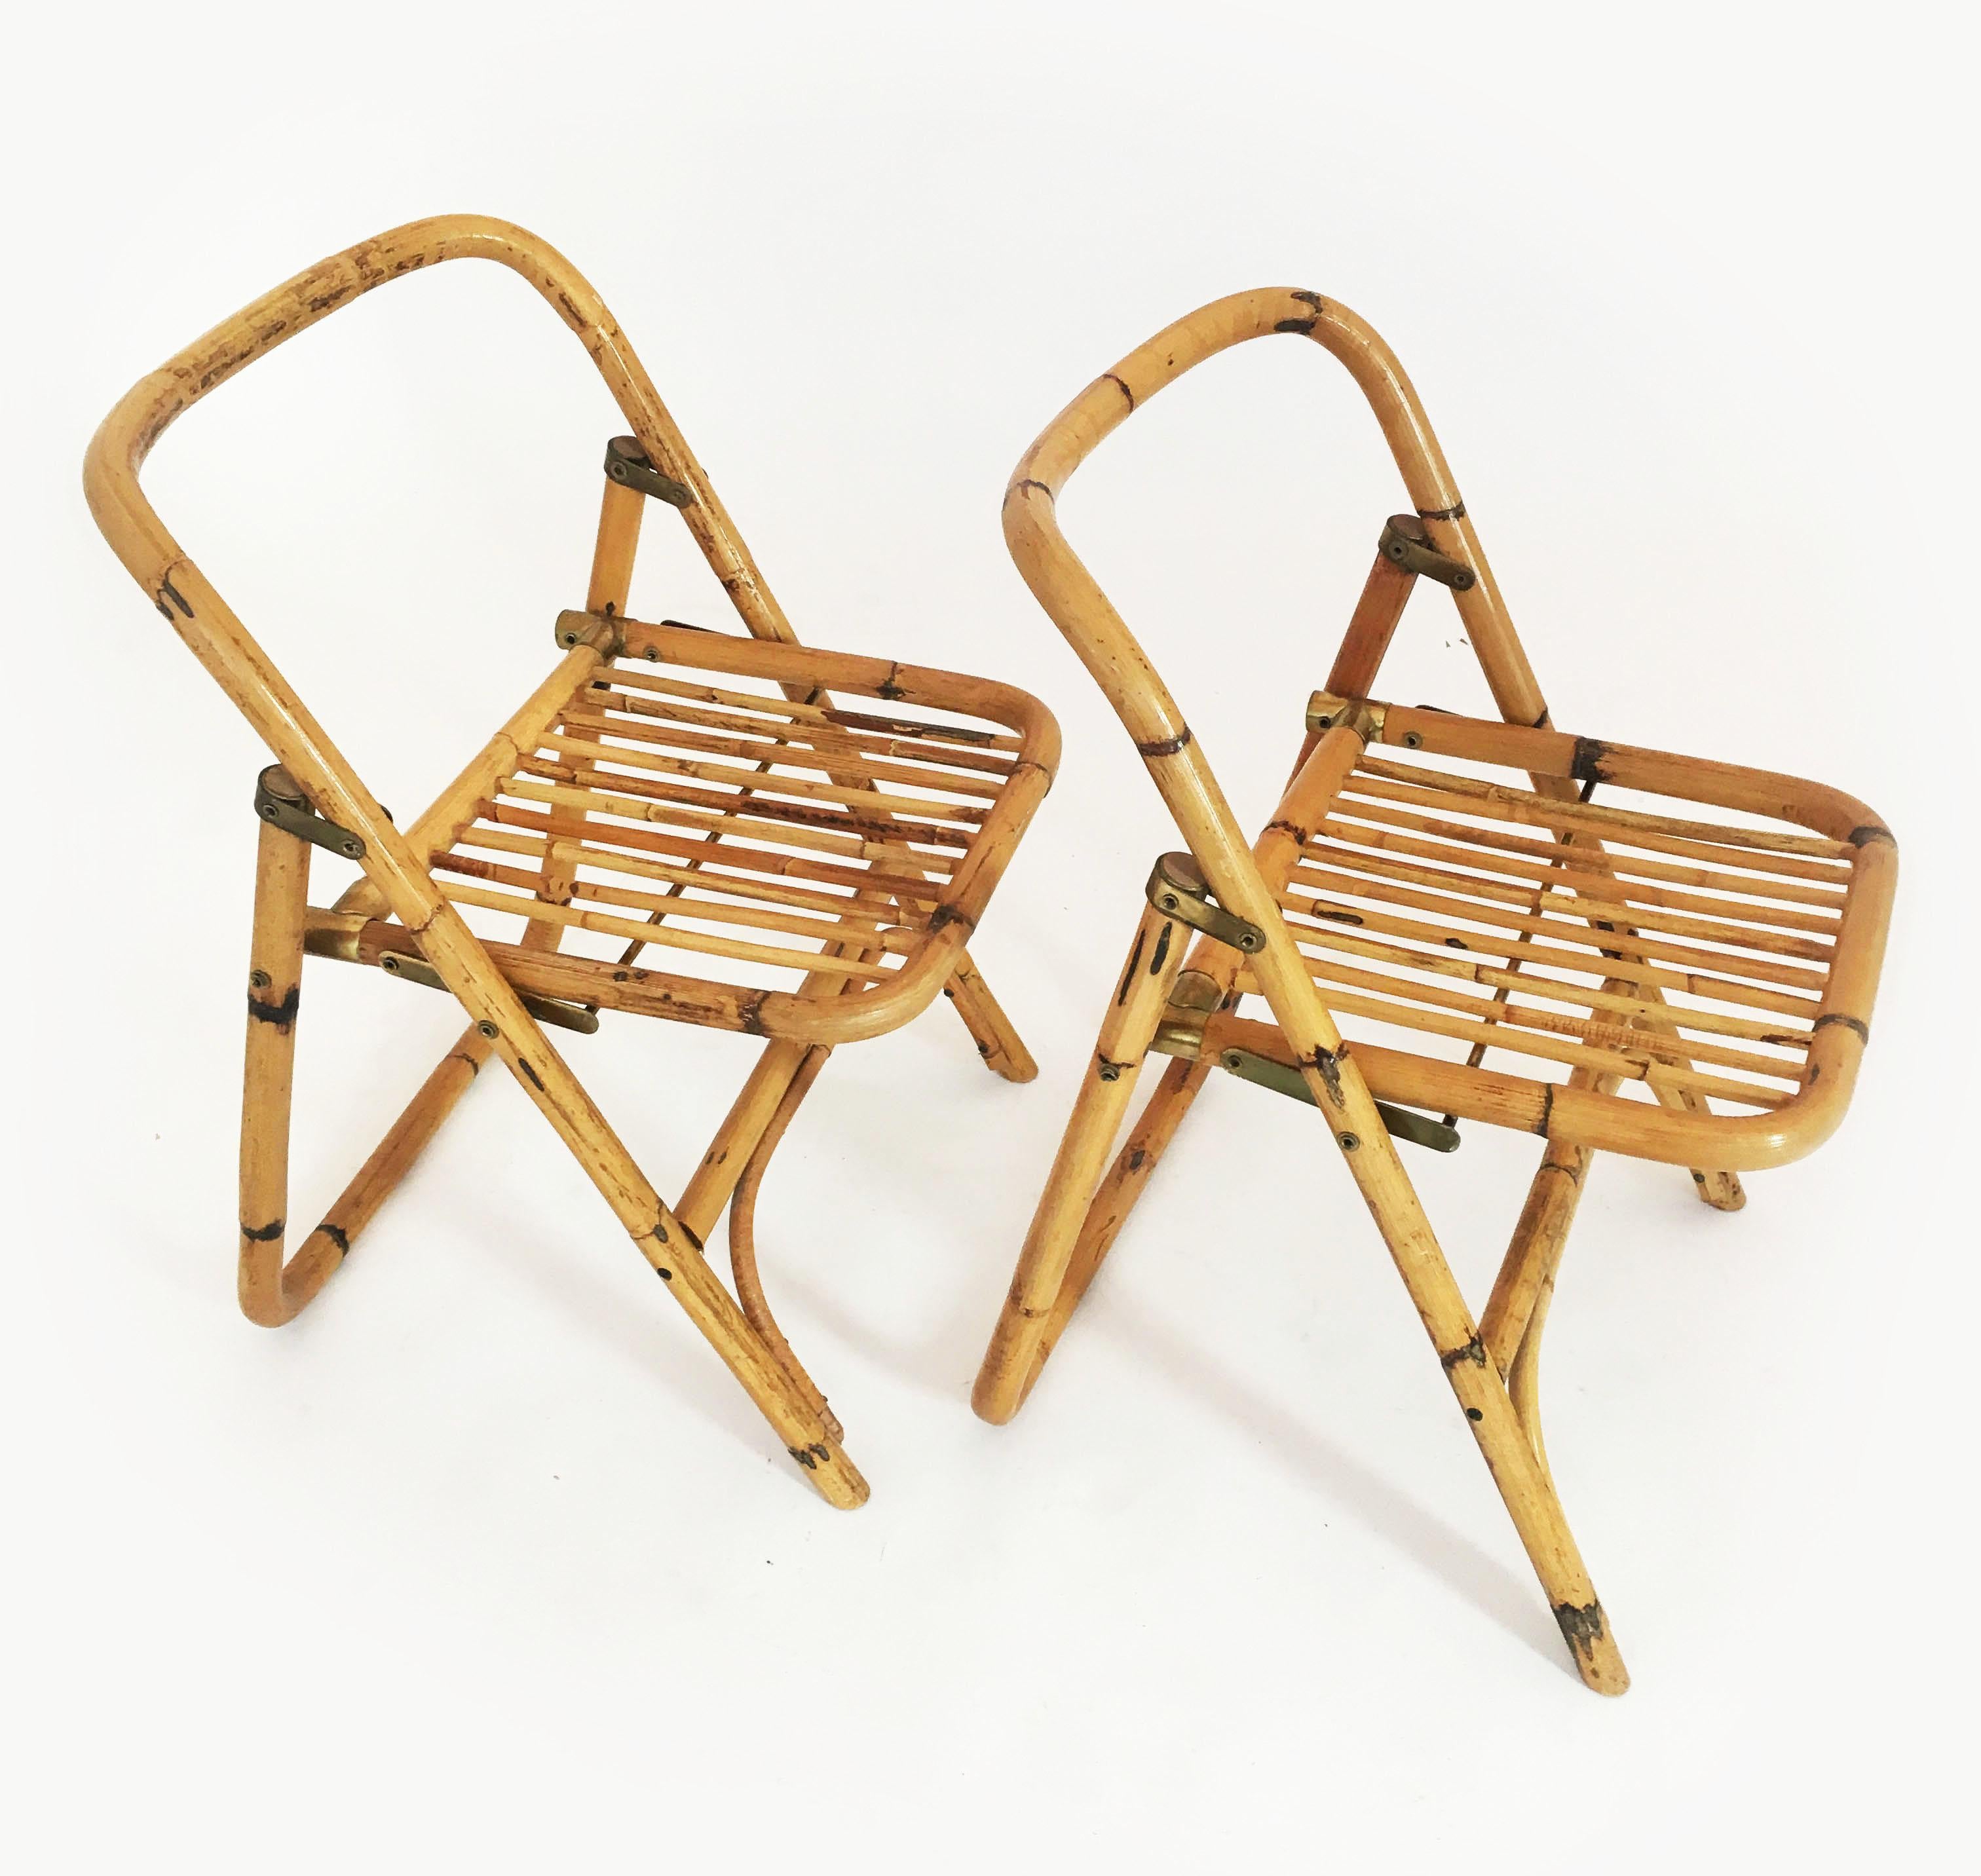 Folding Bamboo Chairs by Dalvera, Italy 1970s. Signed: DALVERA Made in Italy.